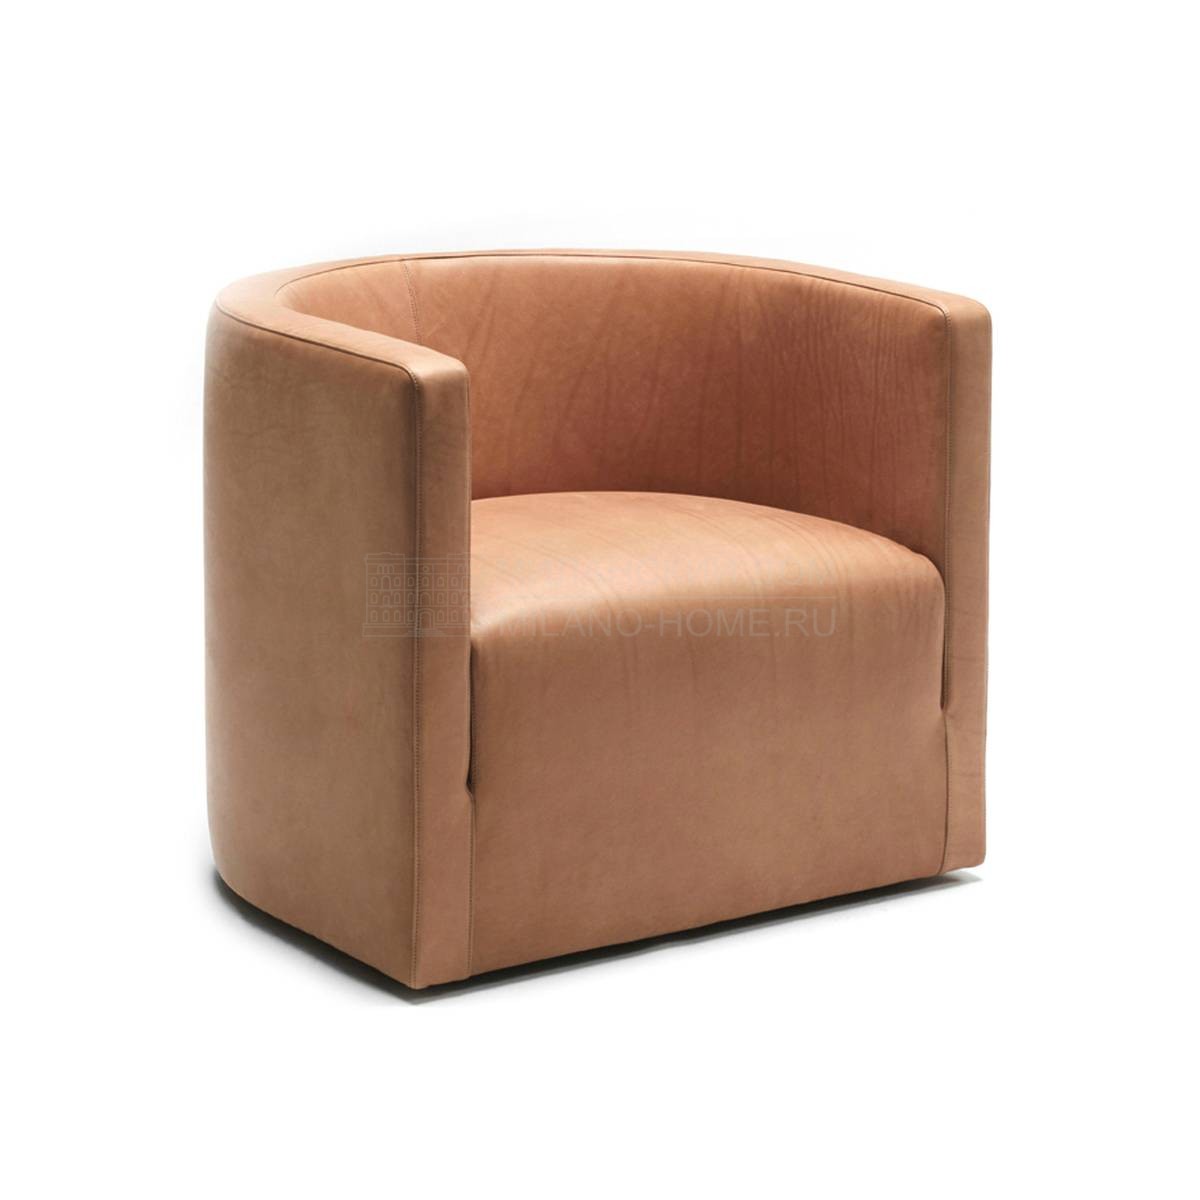 Кожаное кресло Confident armchair leather из Италии фабрики LIVING DIVANI